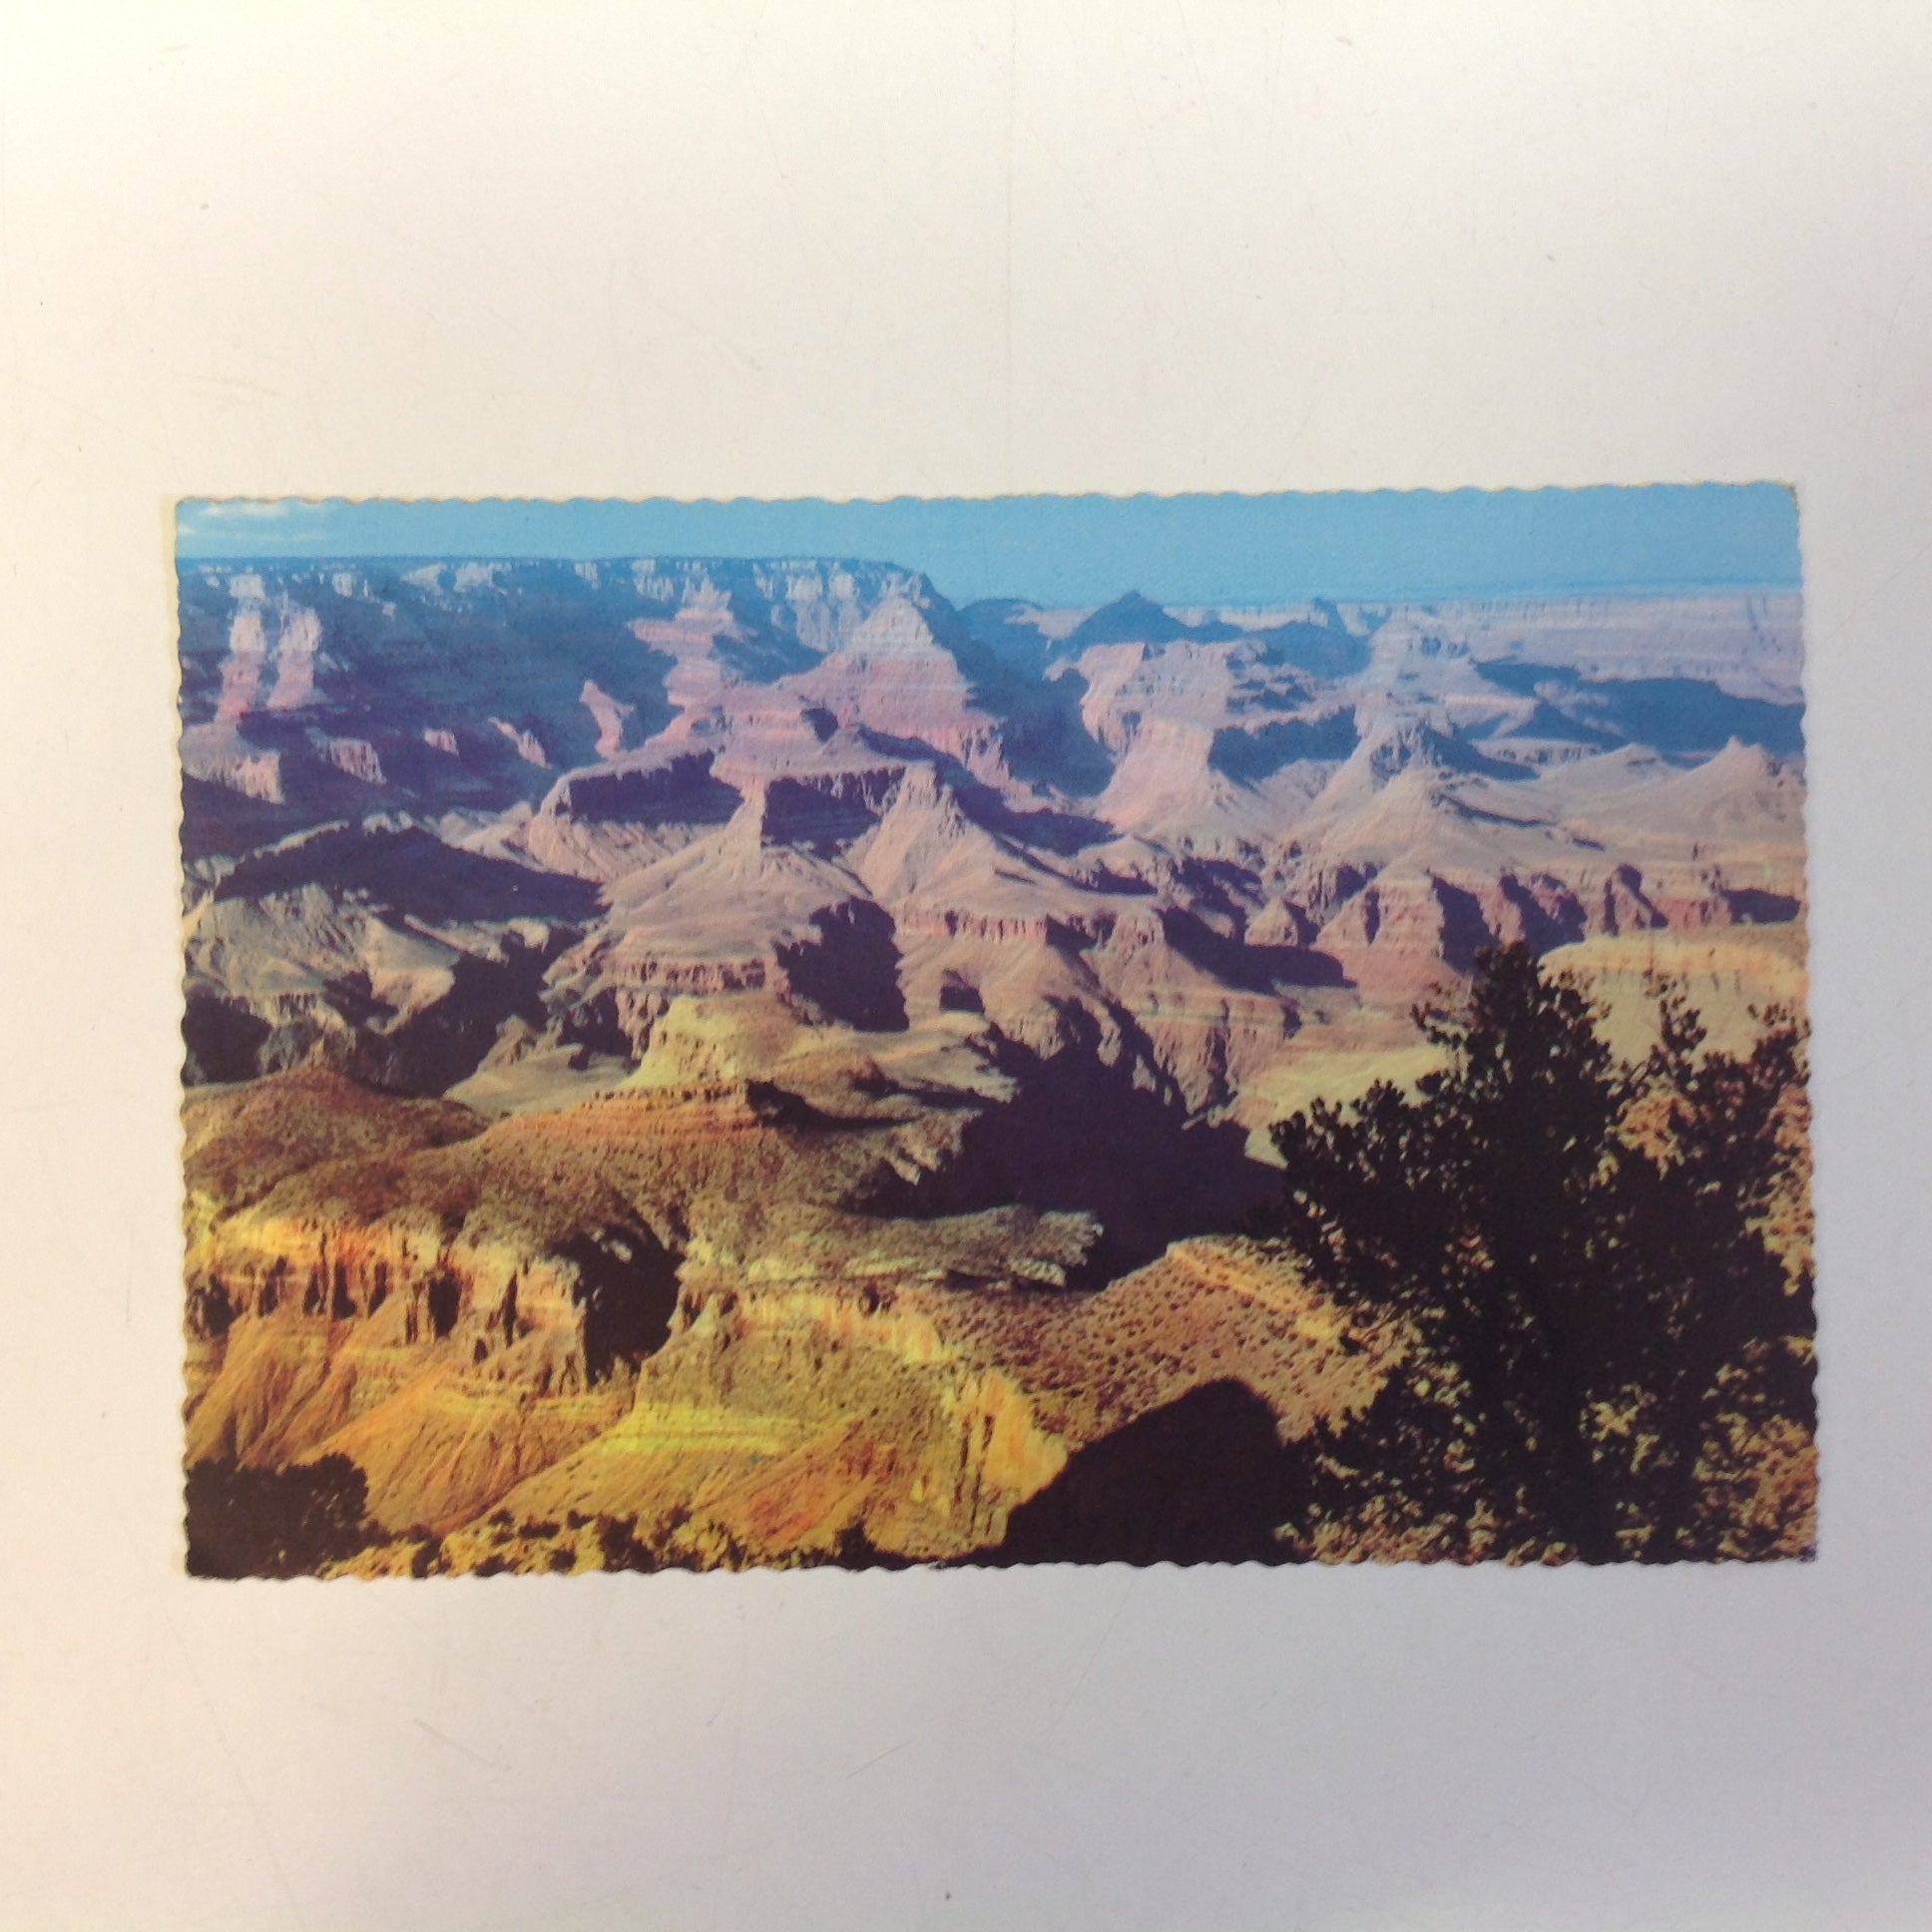 Vintage Petley Ektachrome Bob Fronske Souvenir Color Scalloped Edge Postcard Grand View Point South Rim Grand Canyon National Park North of US 66 Flagstaff-Williams Arizona